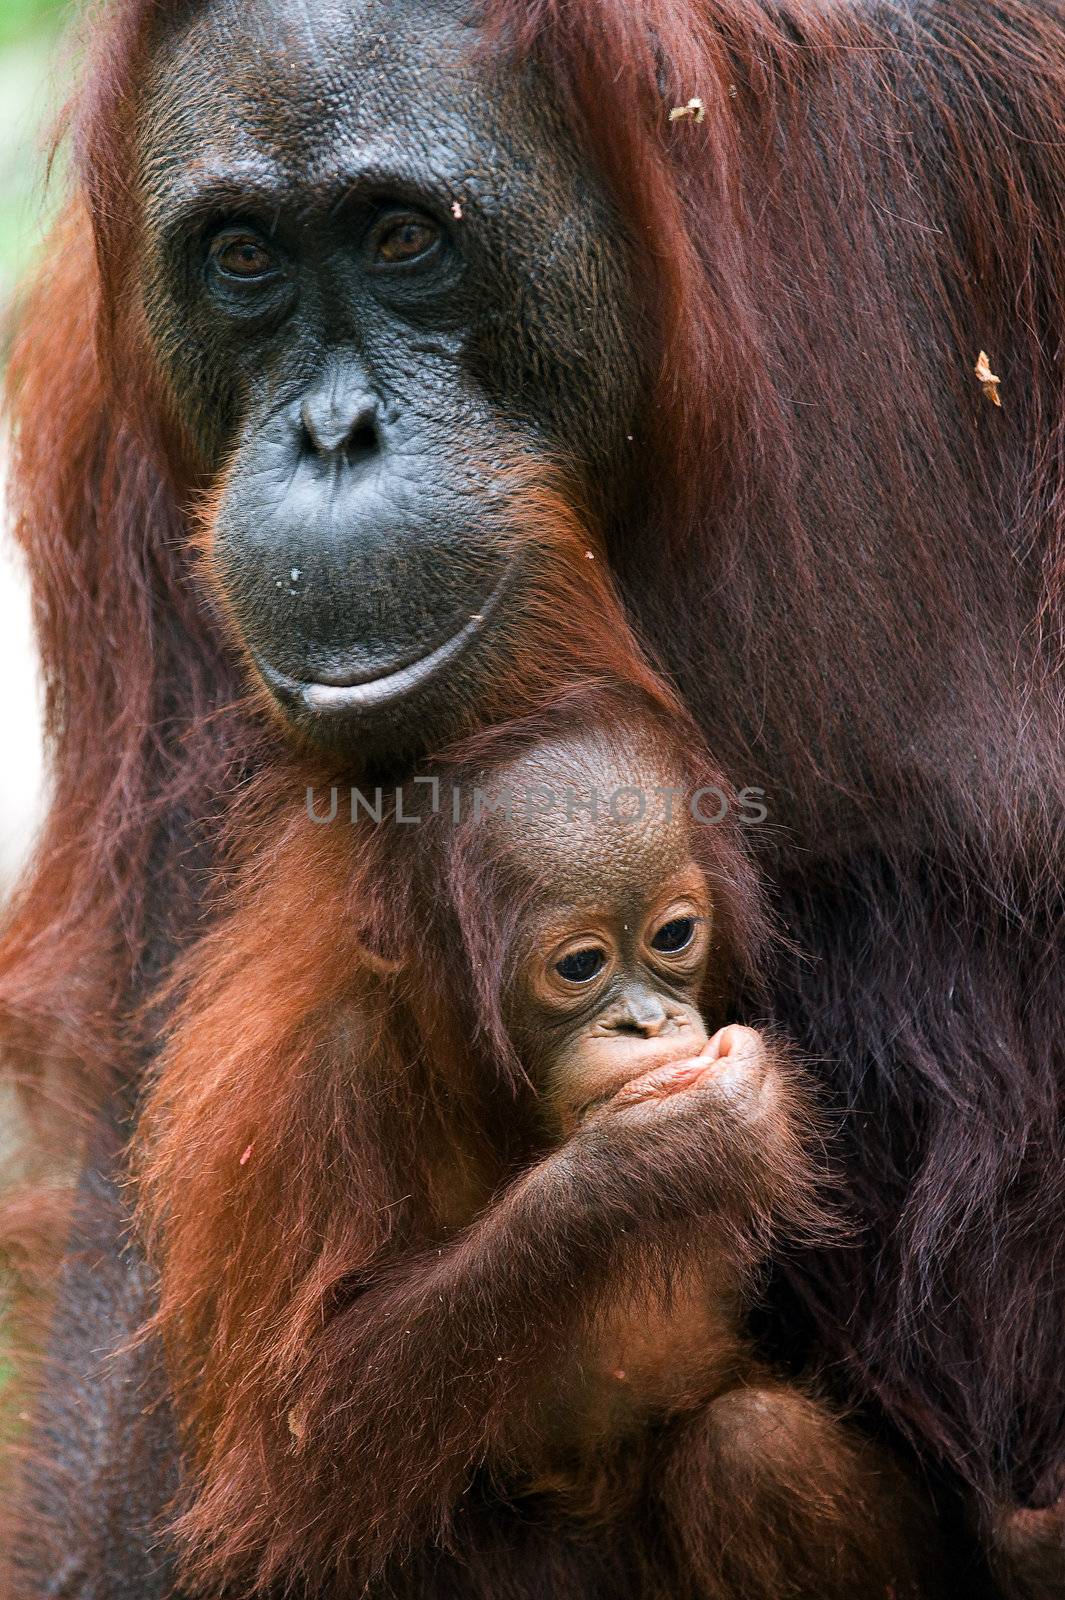 The orangutan with a cub by SURZ